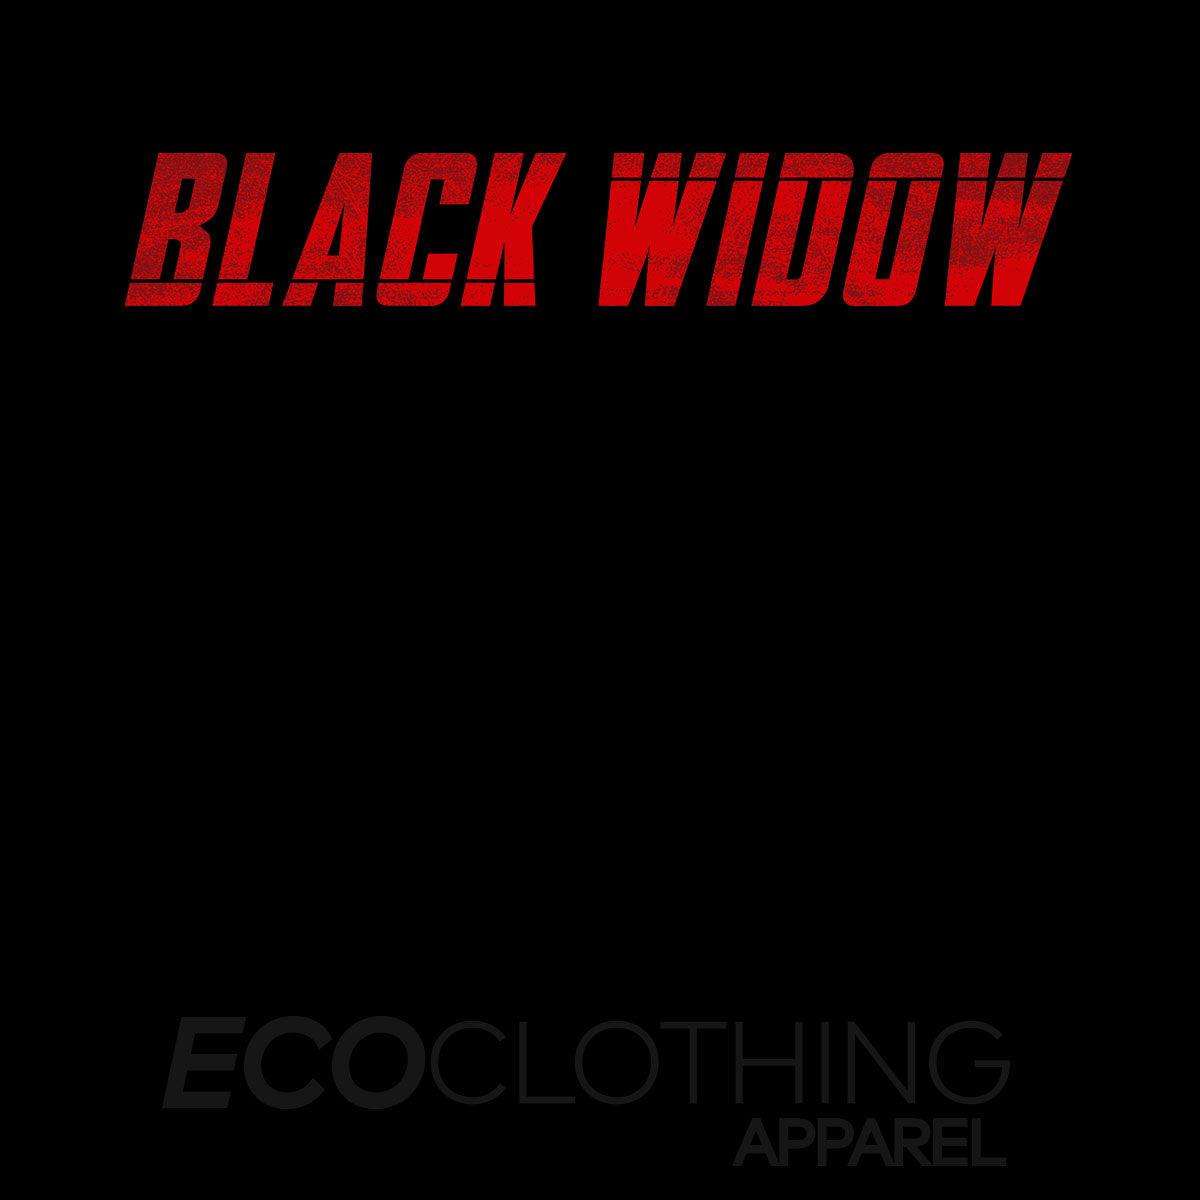 Black Widow Action Hero Marvel Tee Adventure Superhero Adult Kids Gift Top T-shirt for Kids - Kuzi Tees